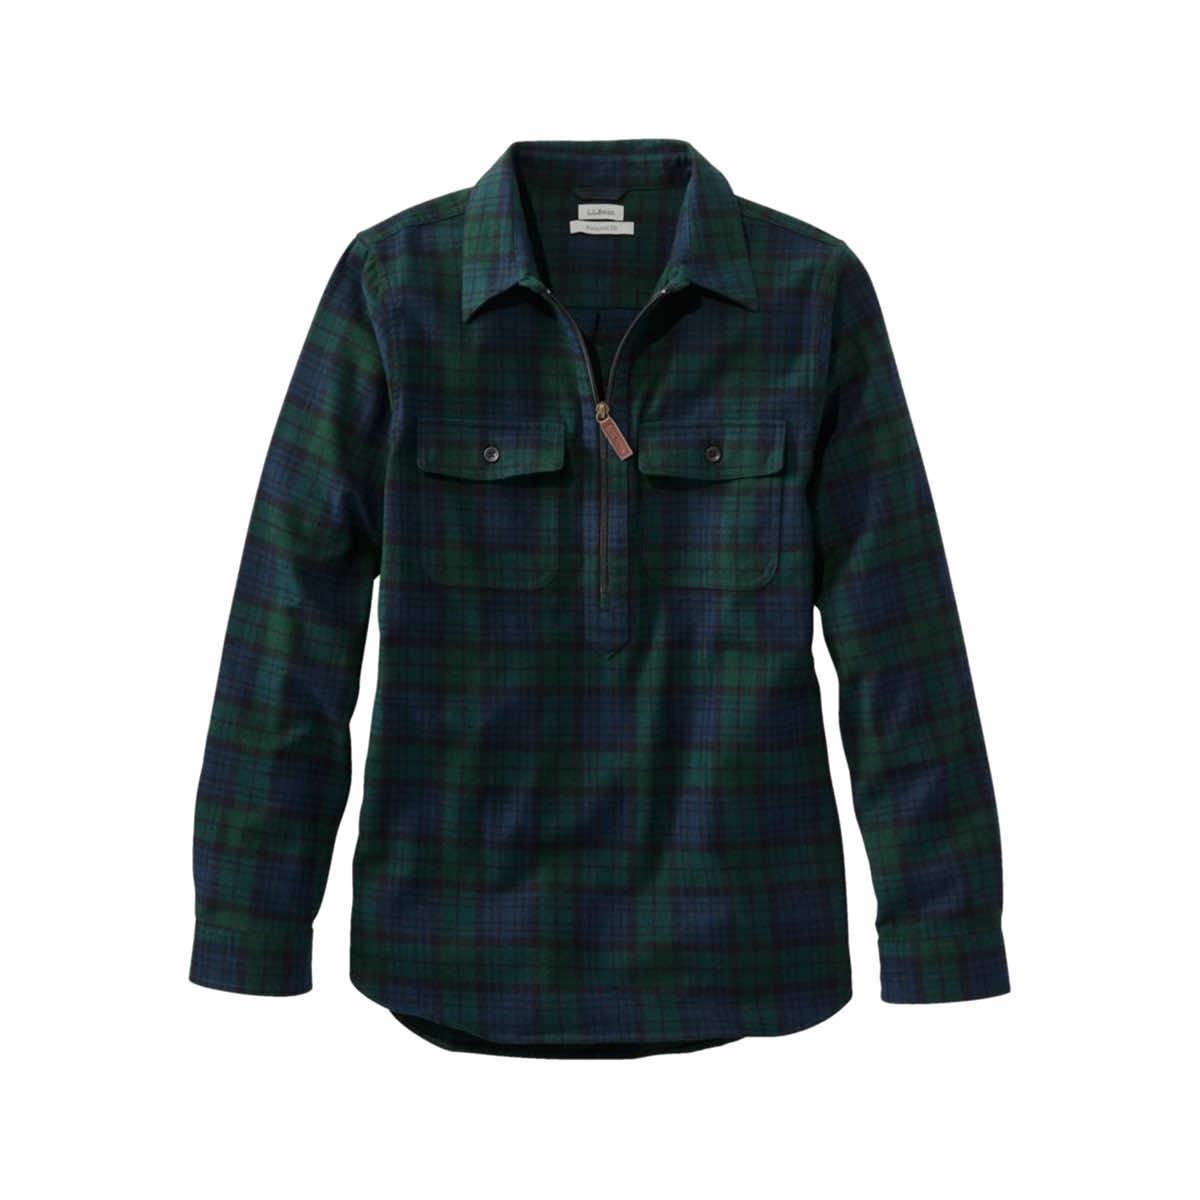 Men's Fleece Lined Plaid Shirts Button Down Fashion Long Sleeve